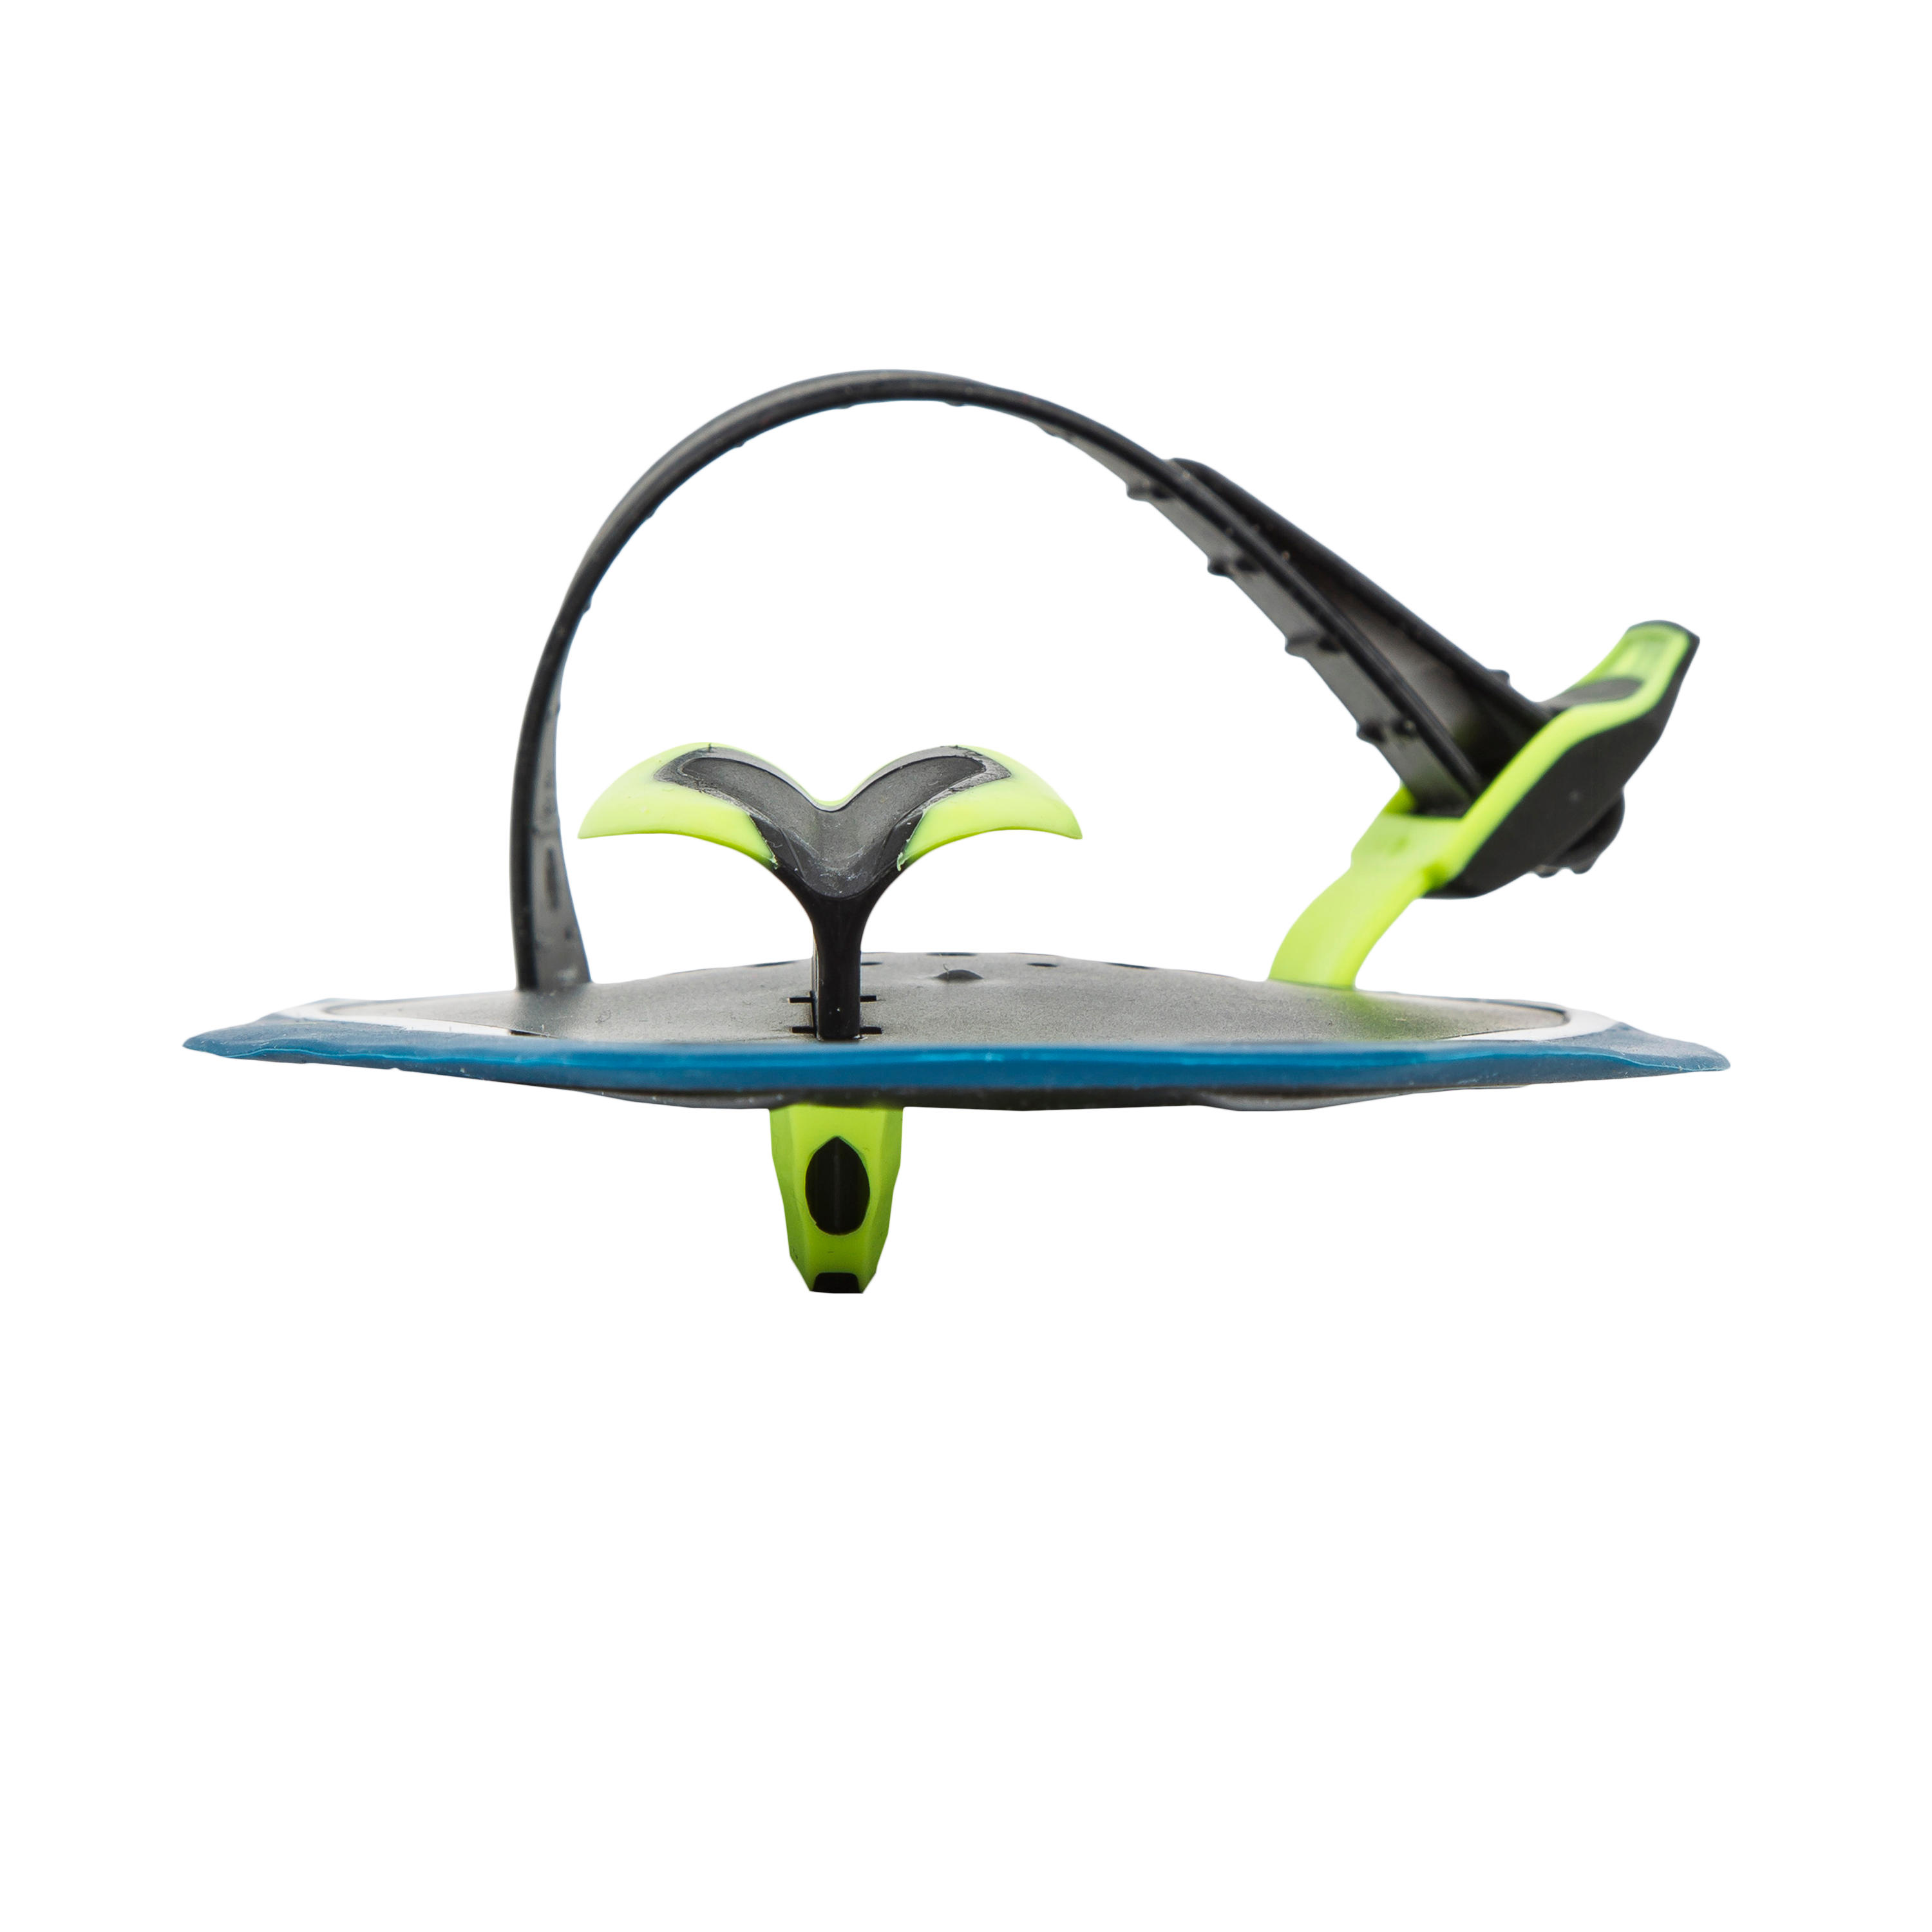 Swimming Paddles Size M - Quick’in 500 Blue/Yellow - NABAIJI